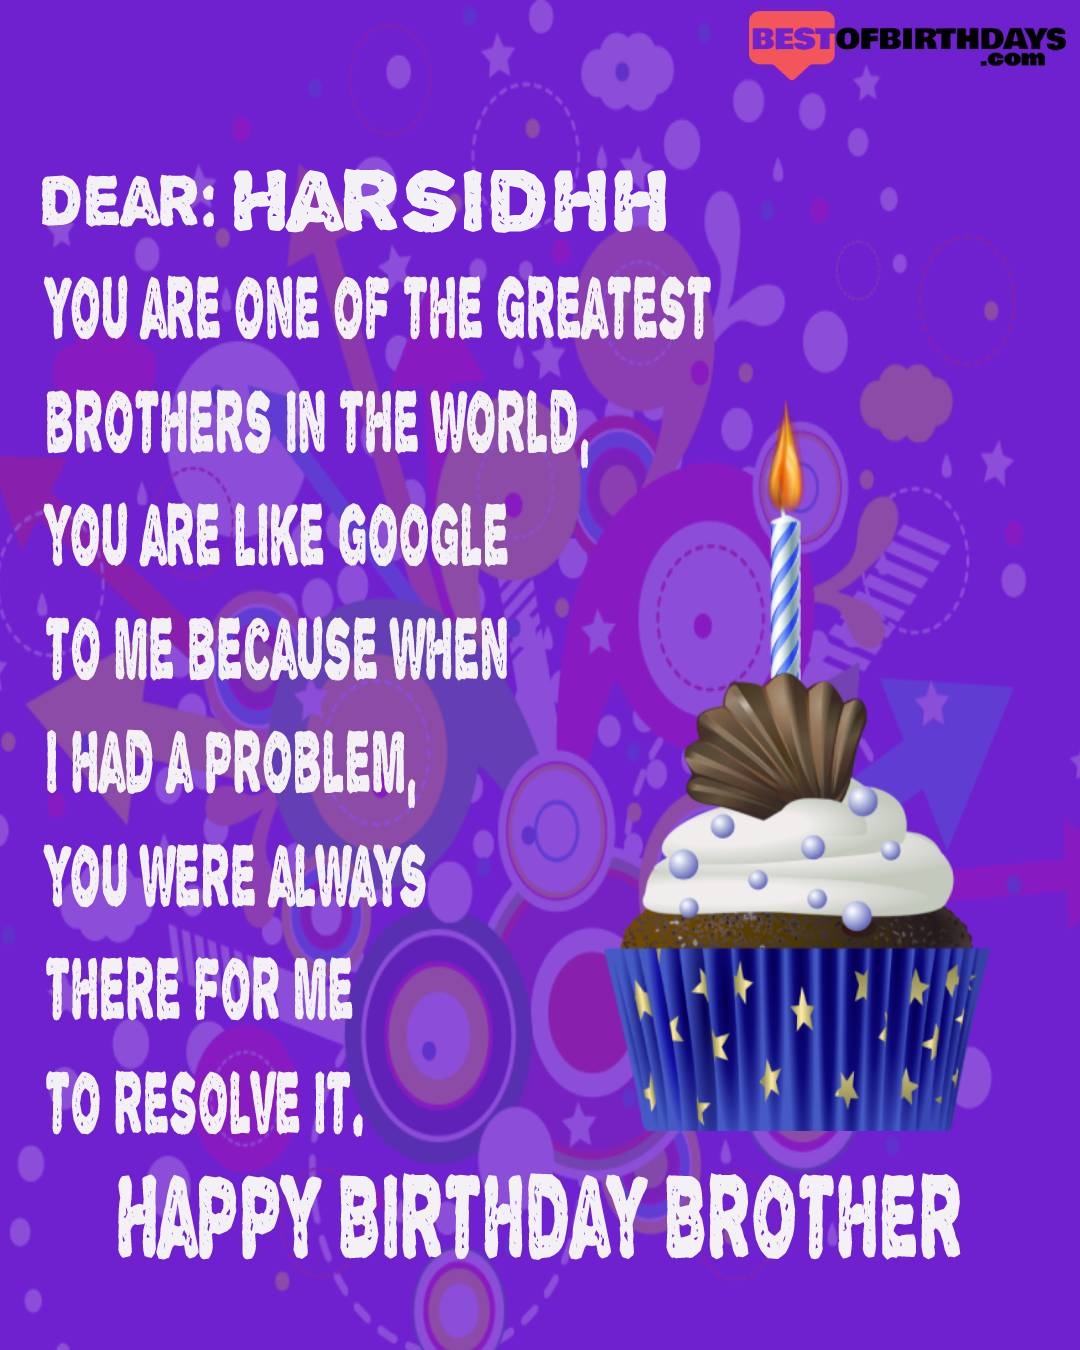 Happy birthday harsidhh bhai brother bro